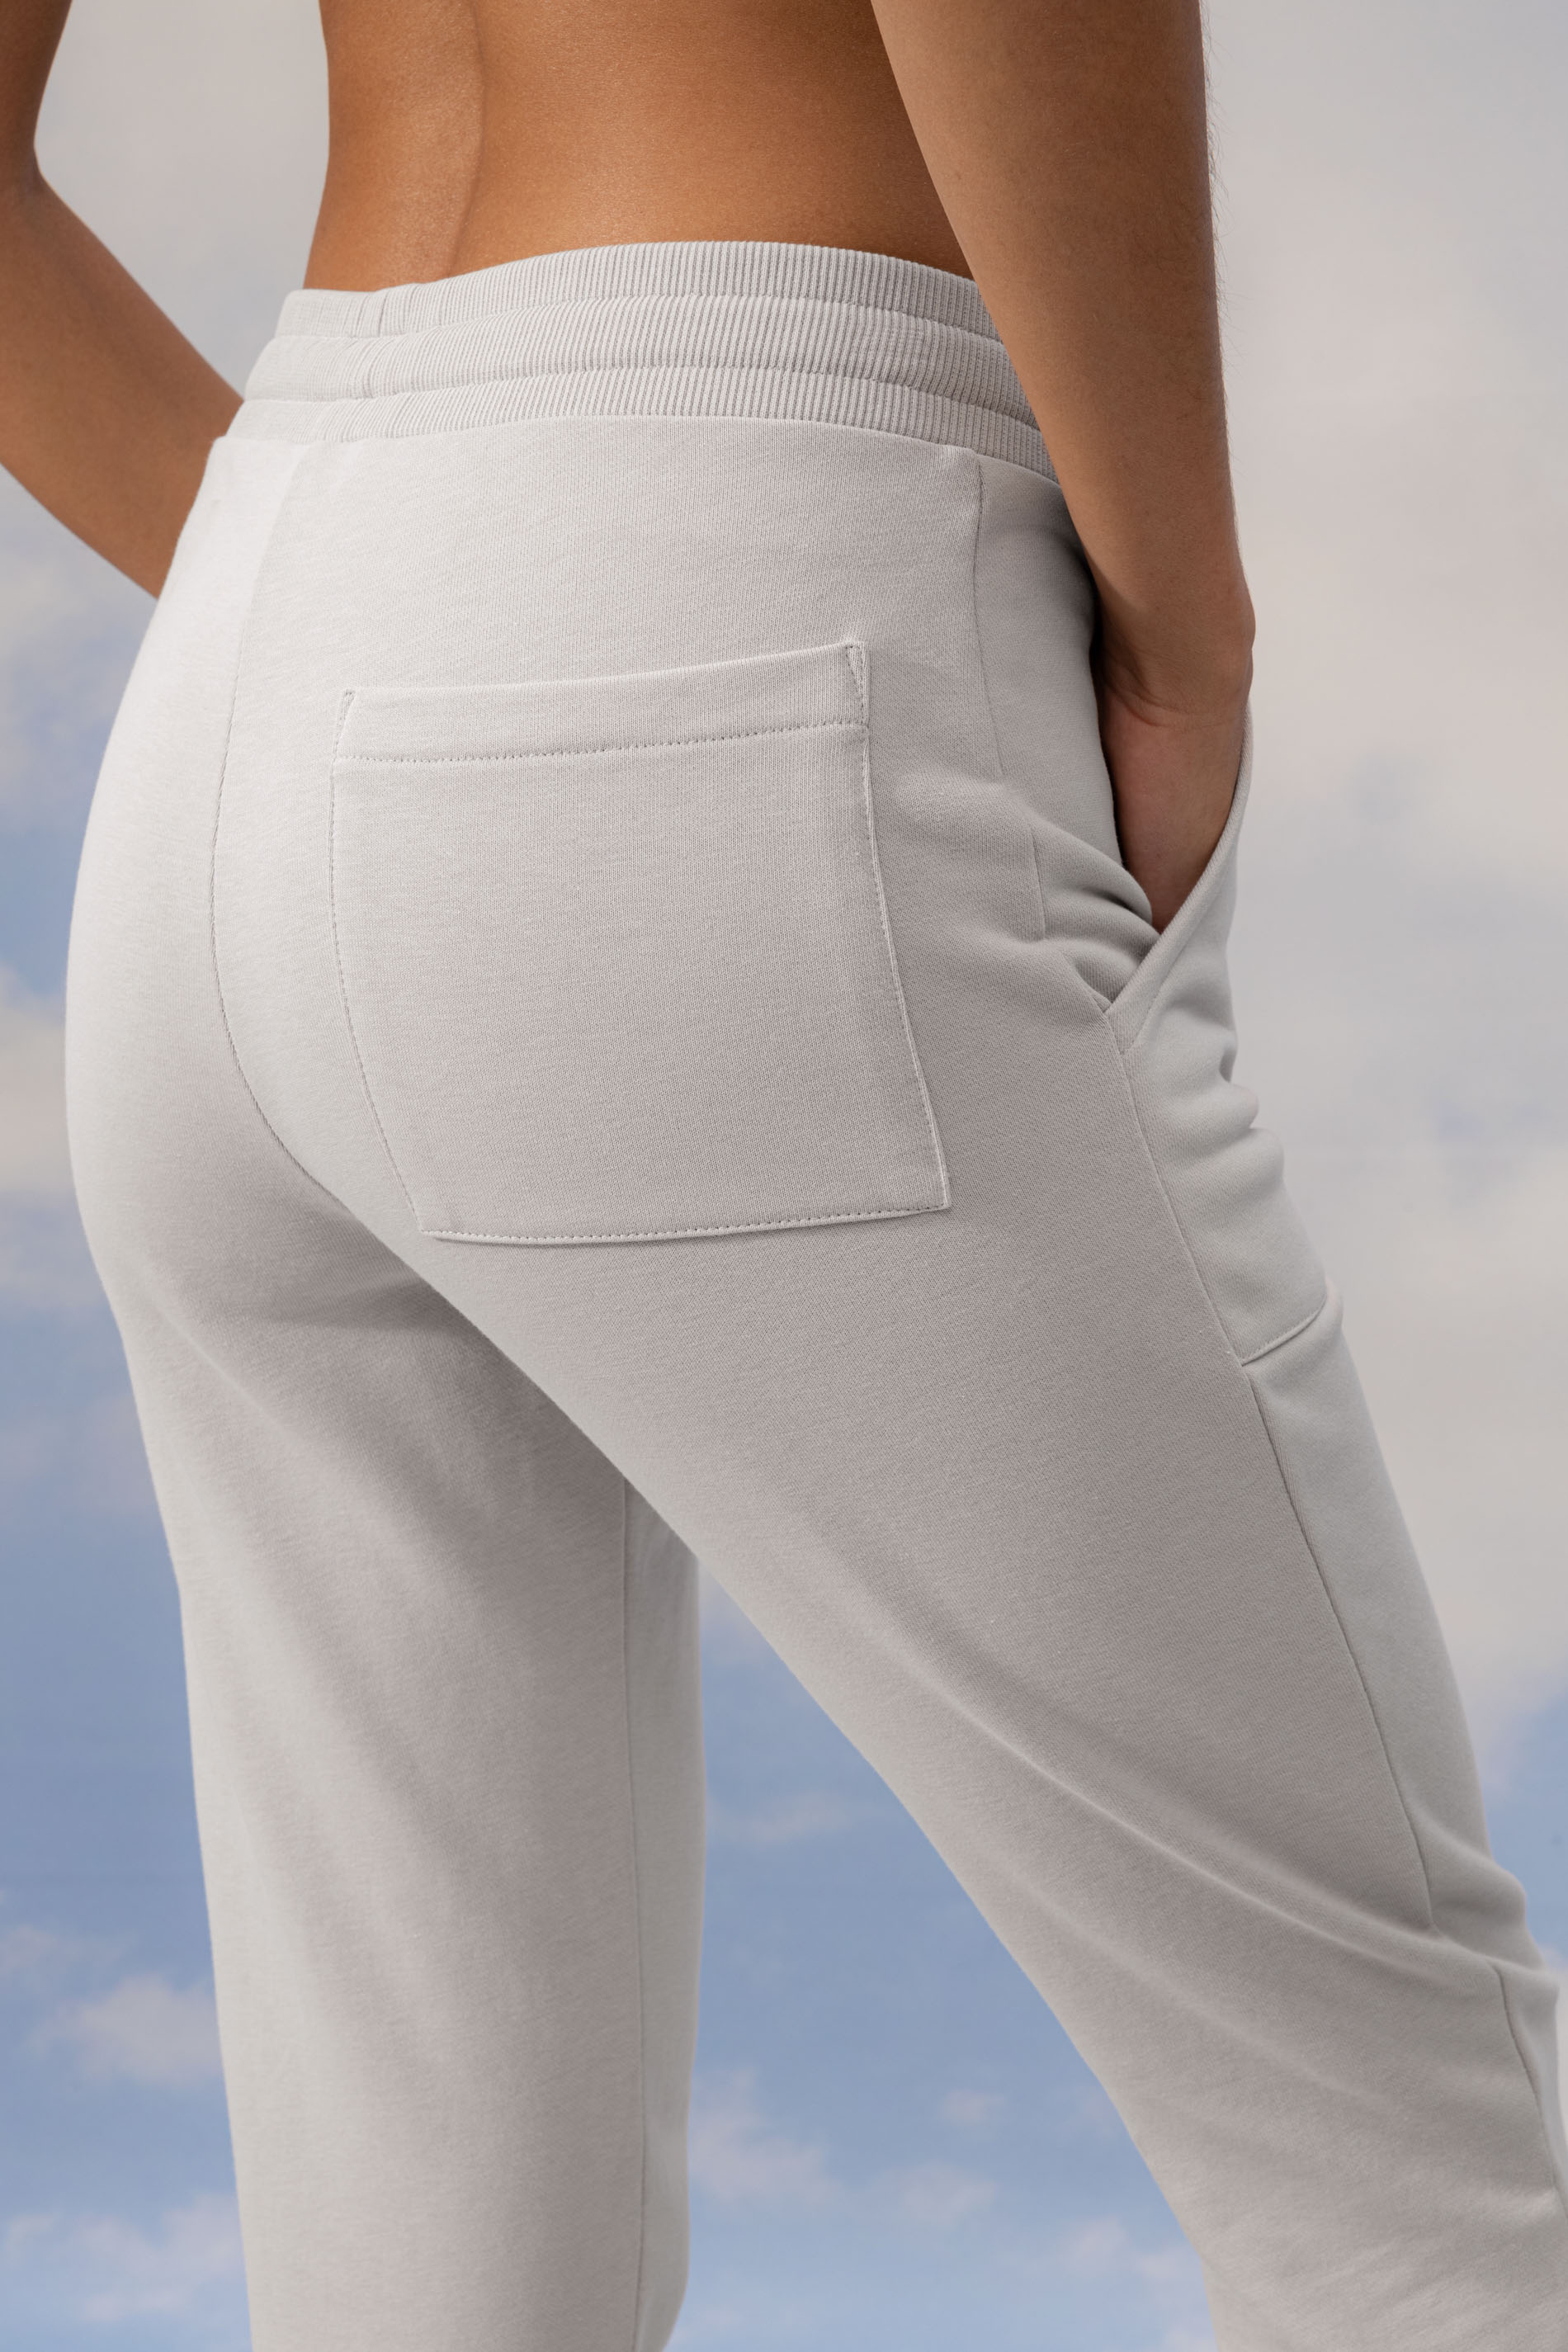 Sweat Pants Mineral Grey Serie Cozy Detailansicht 02 | mey®